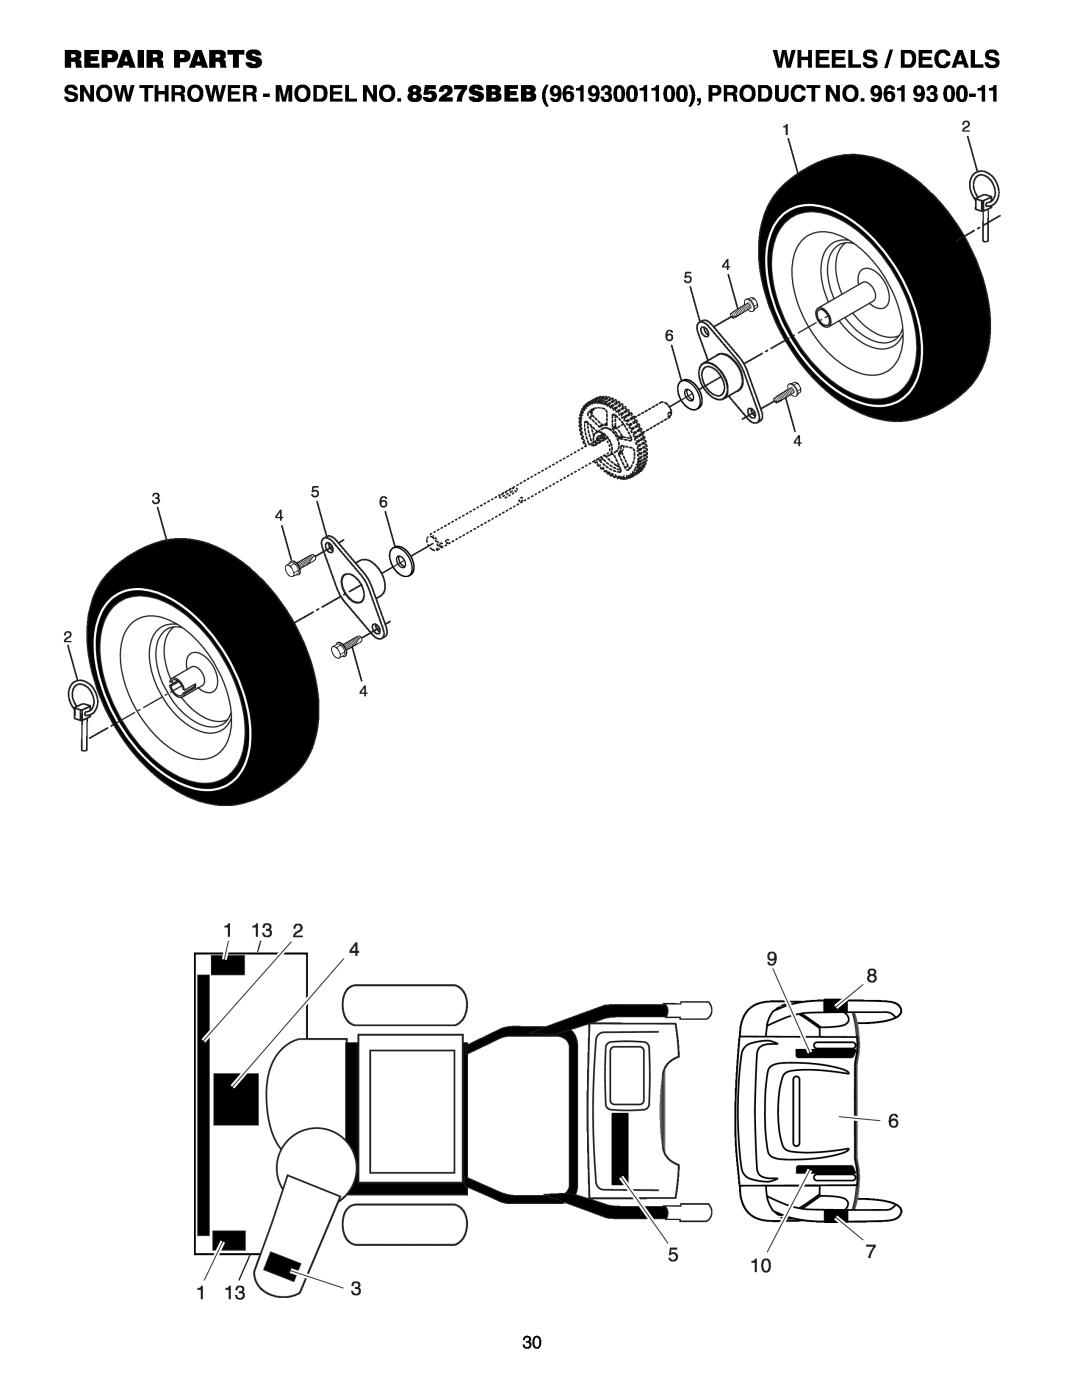 Husqvarna Wheels / Decals, Repair Parts, SNOW THROWER - MODEL NO. 8527SBEB 96193001100, PRODUCT NO. 961, 1 13 